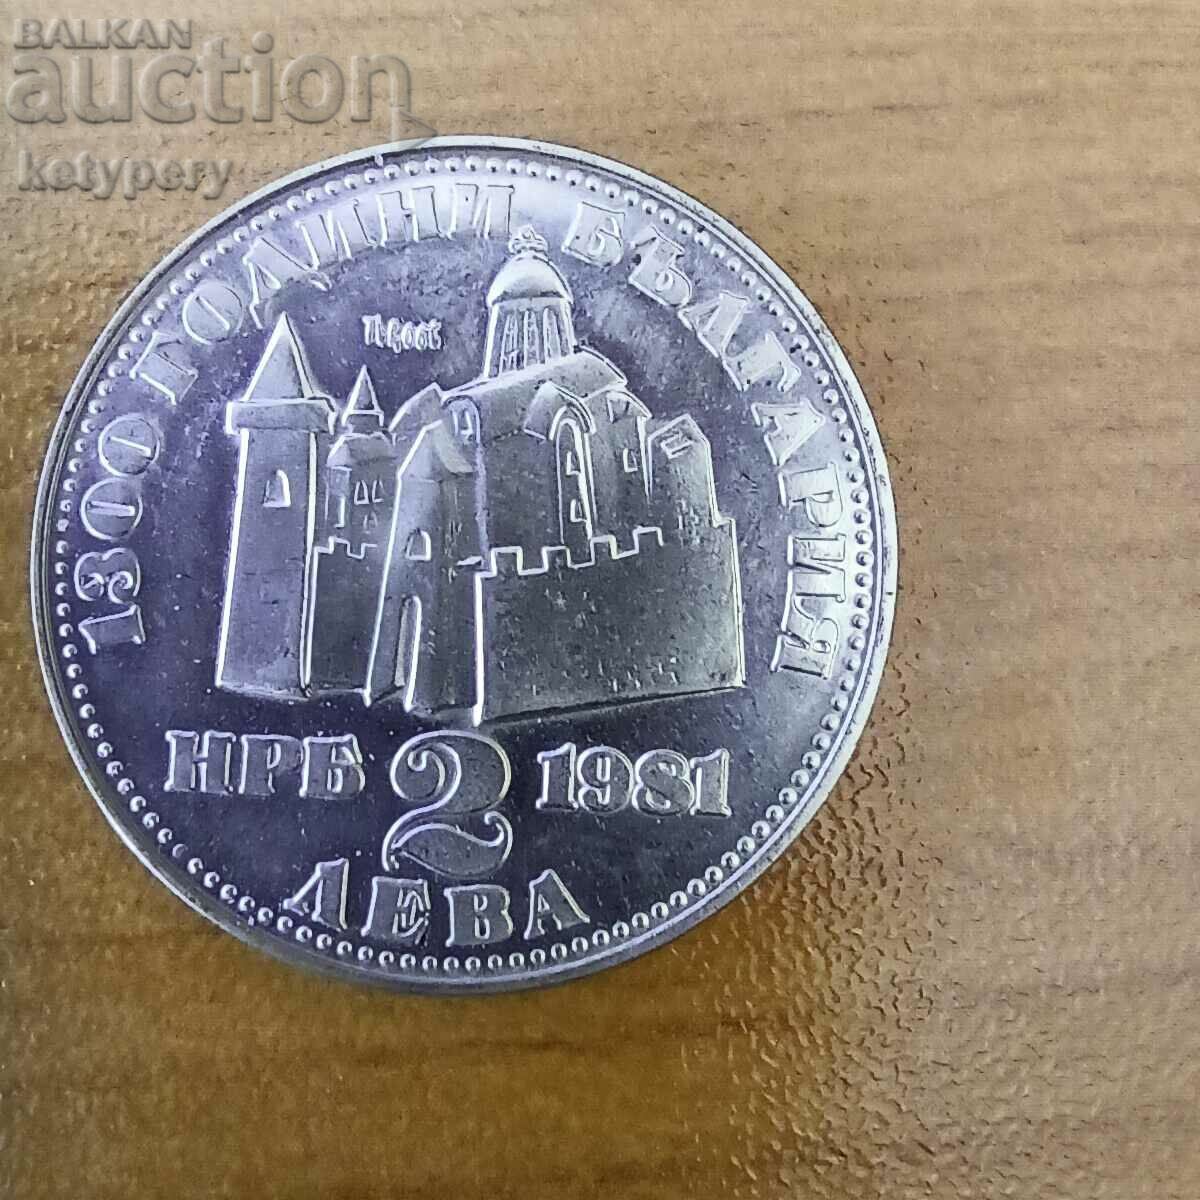 2 leva 1981 1300 years of Bulgaria